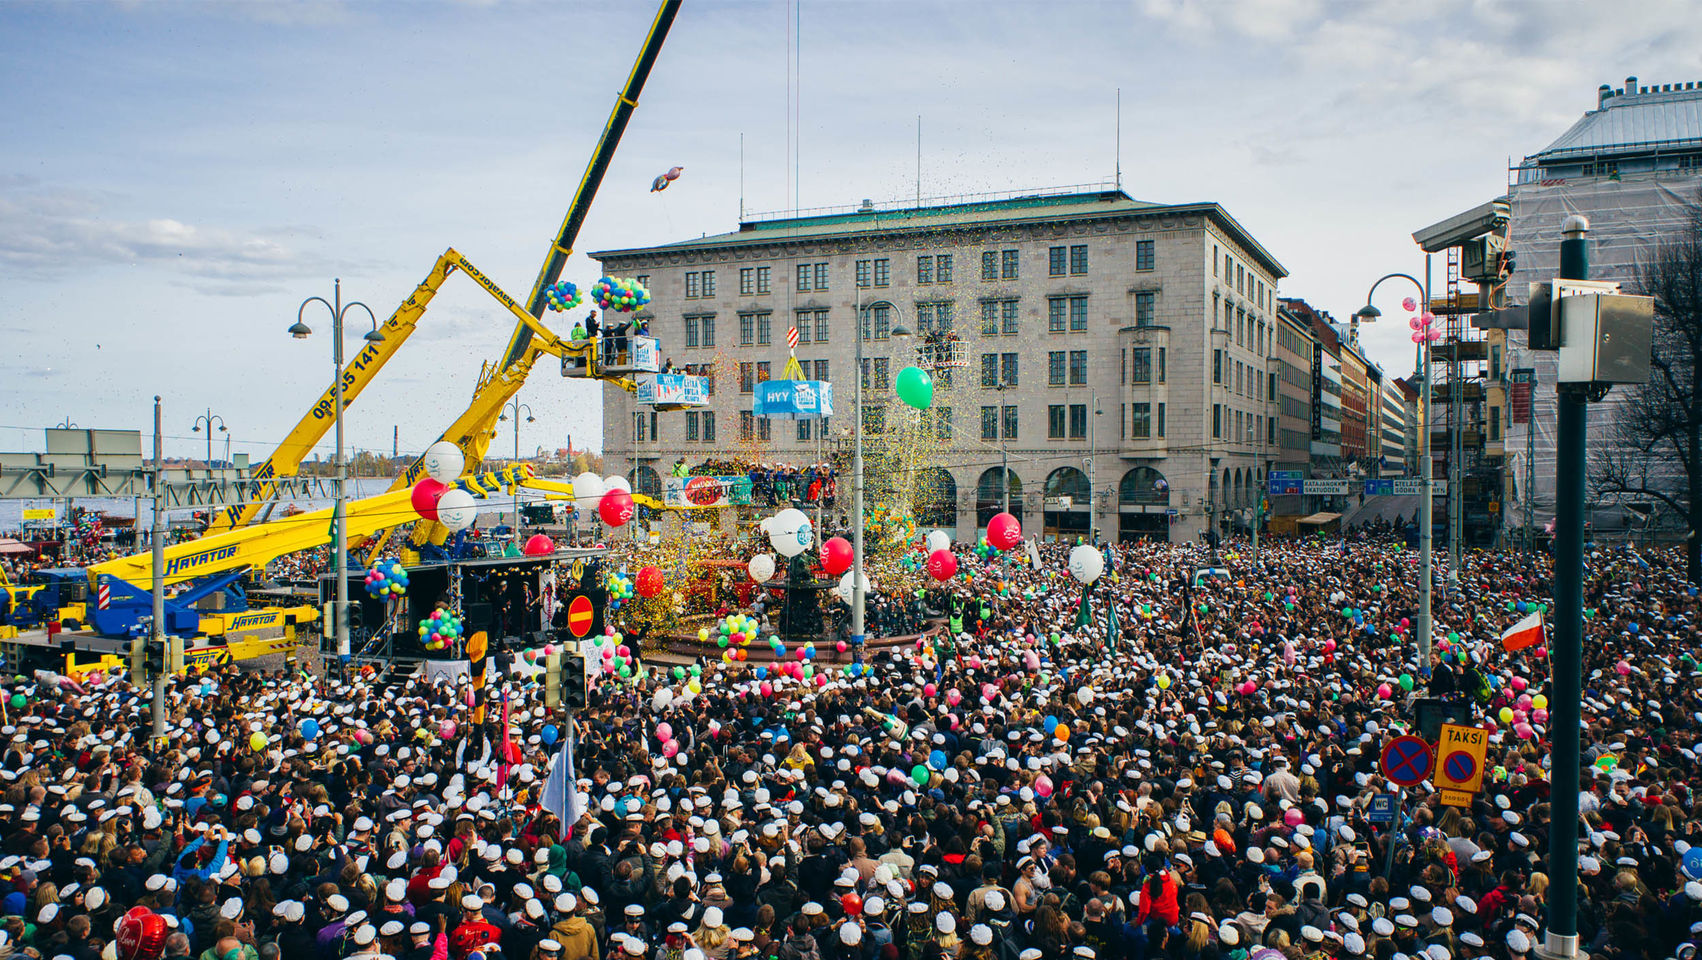 A big crowd of people at the Havis Amanda statue in Helsinki